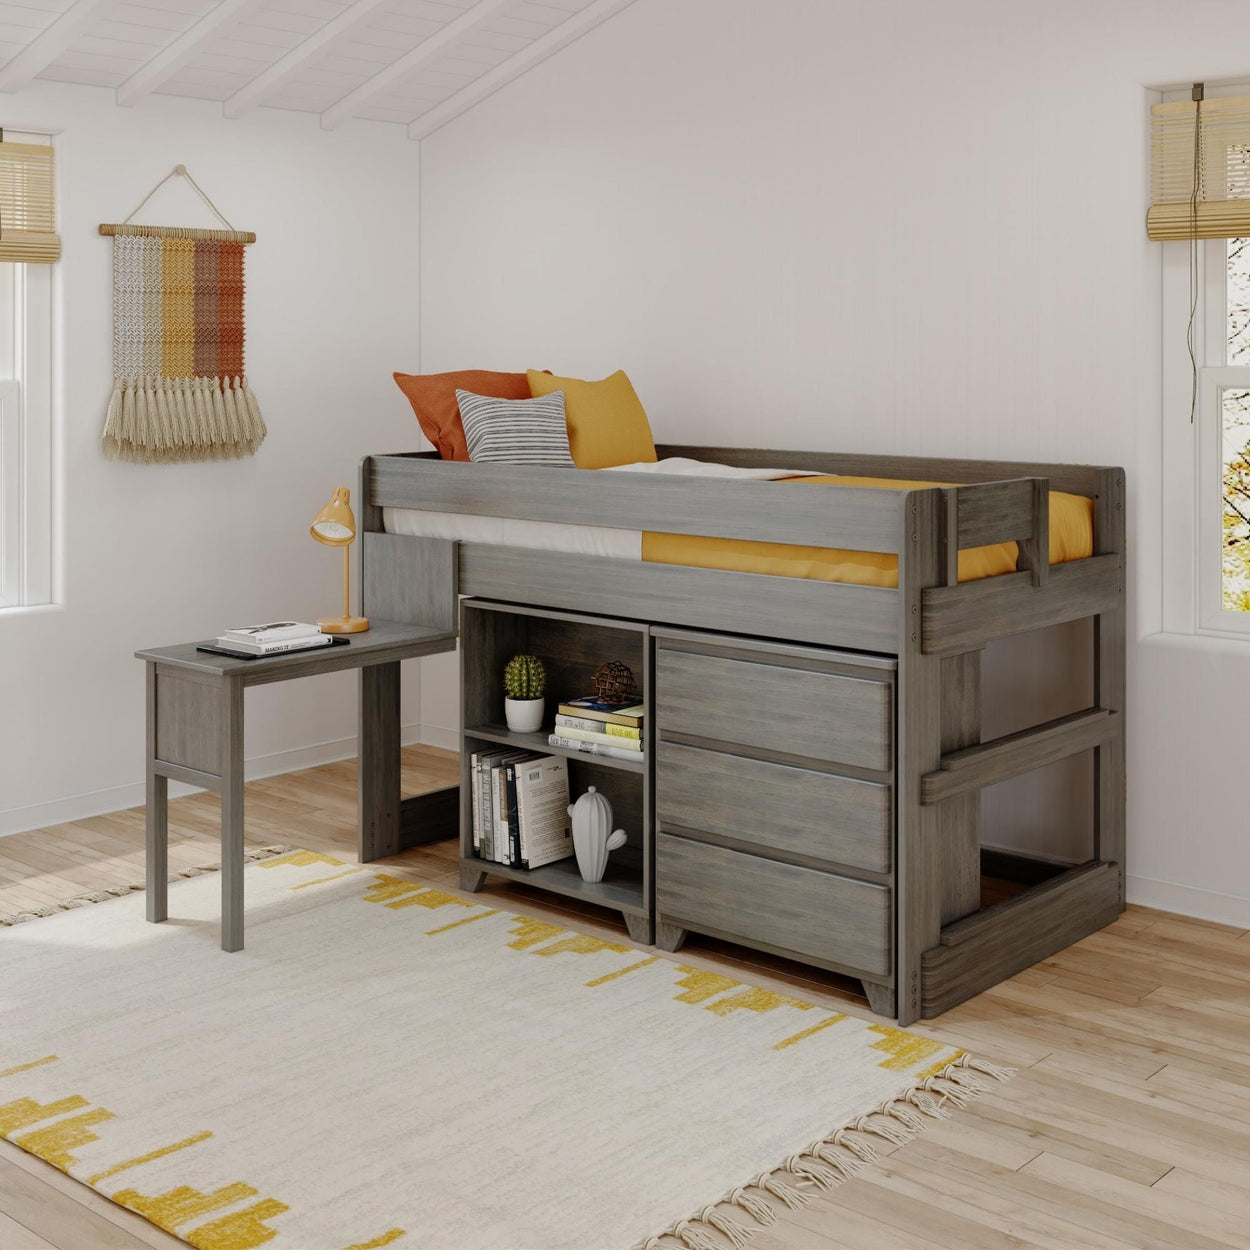 19-3D2BDK-185 : Storage & Study Loft Beds Farmhouse Twin-Size Low Loft with 3-Drawer Dresser, 2-Shelf Bookcase and Hook-on Desk, Driftwood